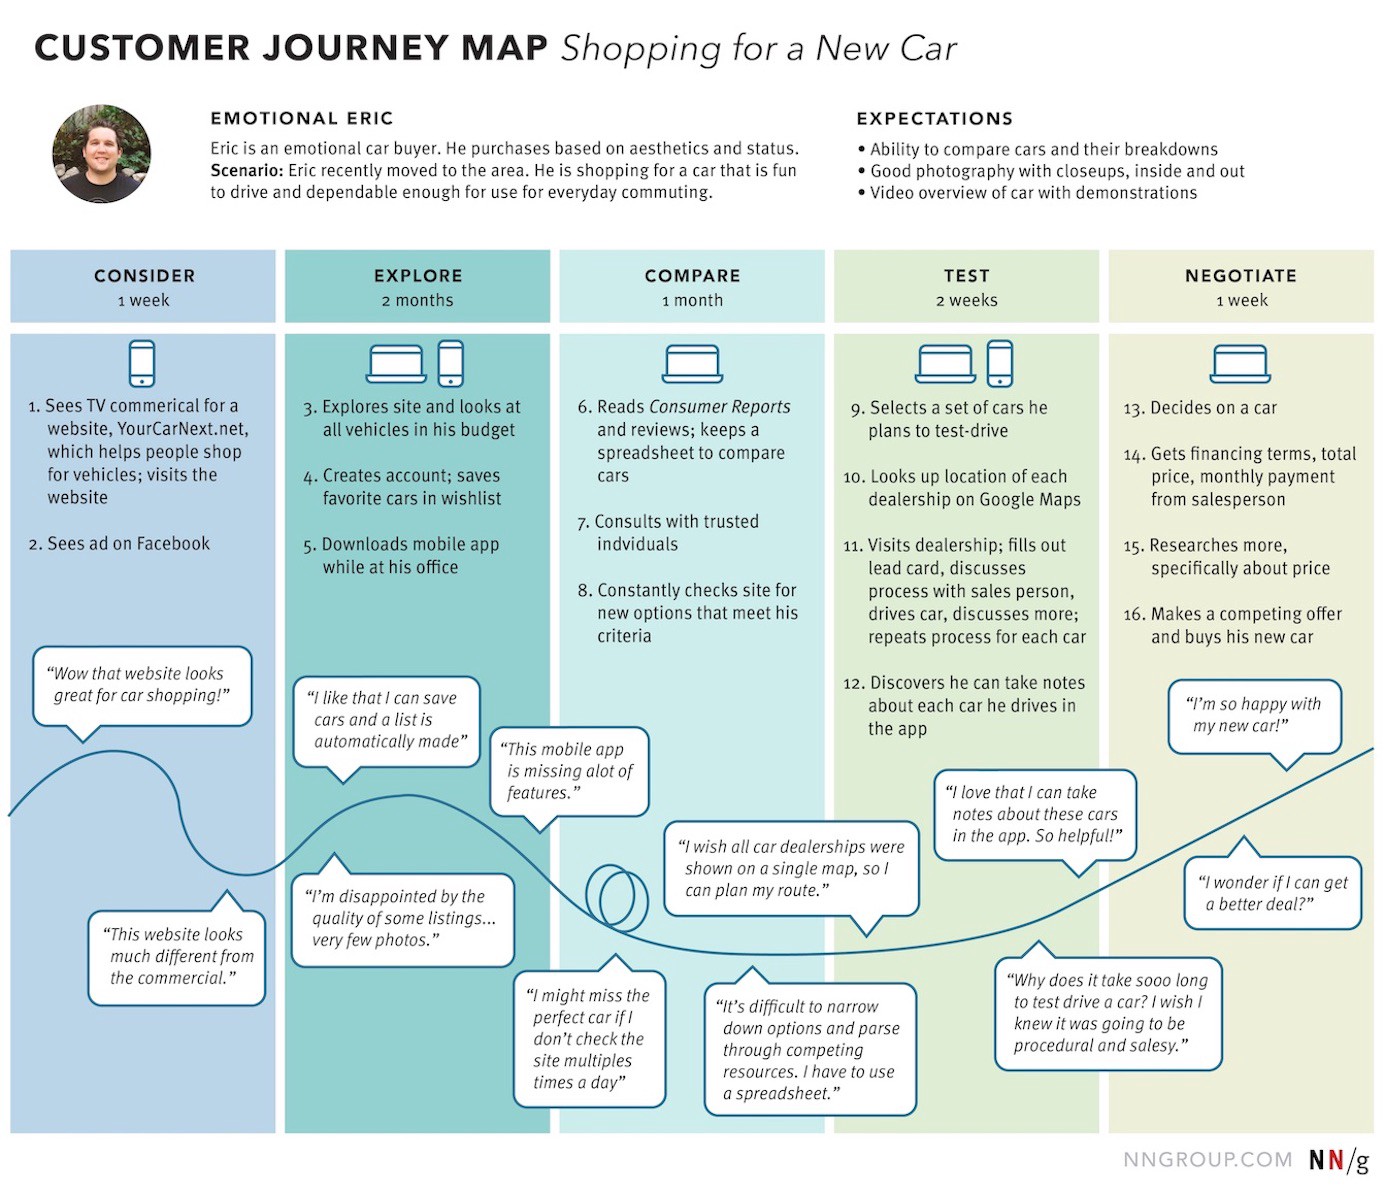 Customer User Journey Map diagram from Nielsen Norman Group.